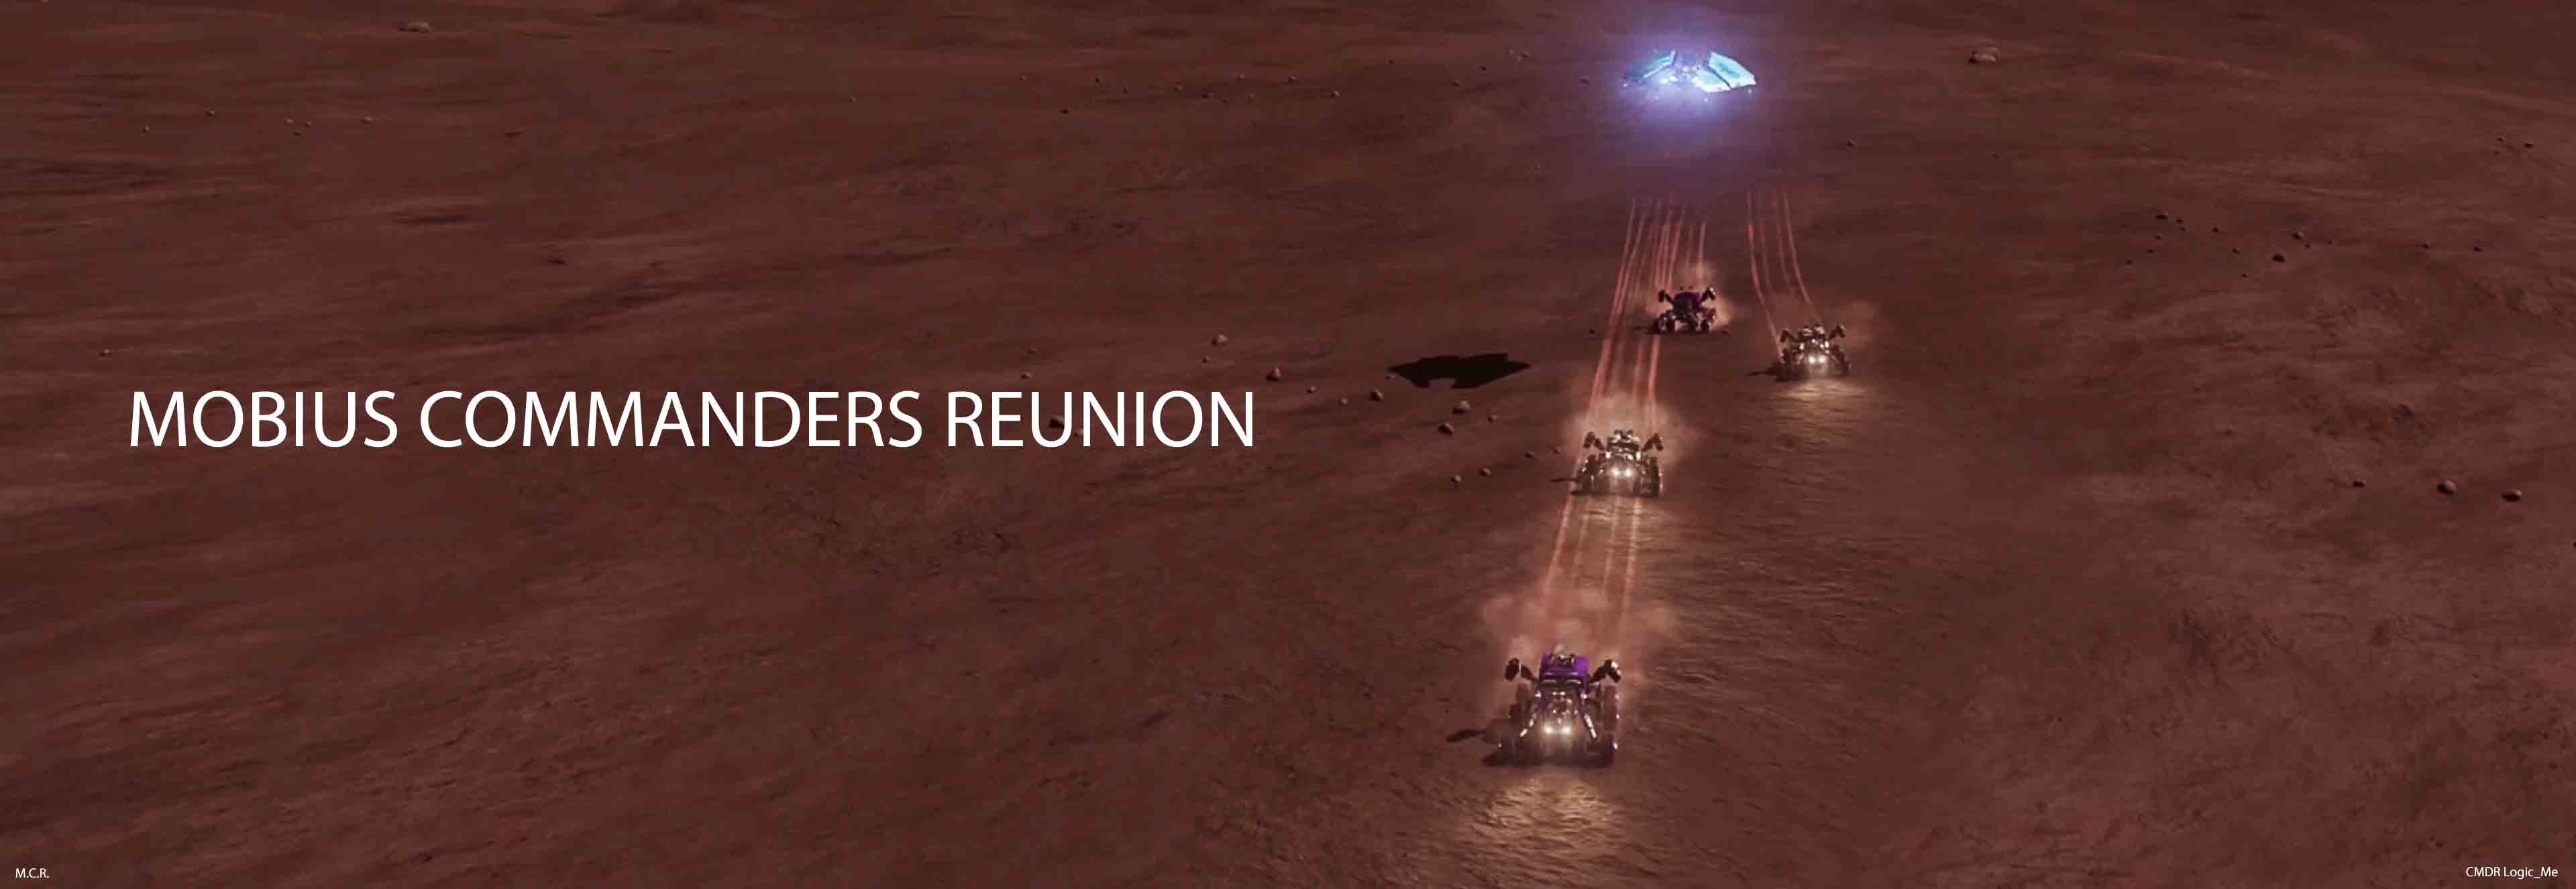 Mobius Commanders Reunion LOGO.jpg